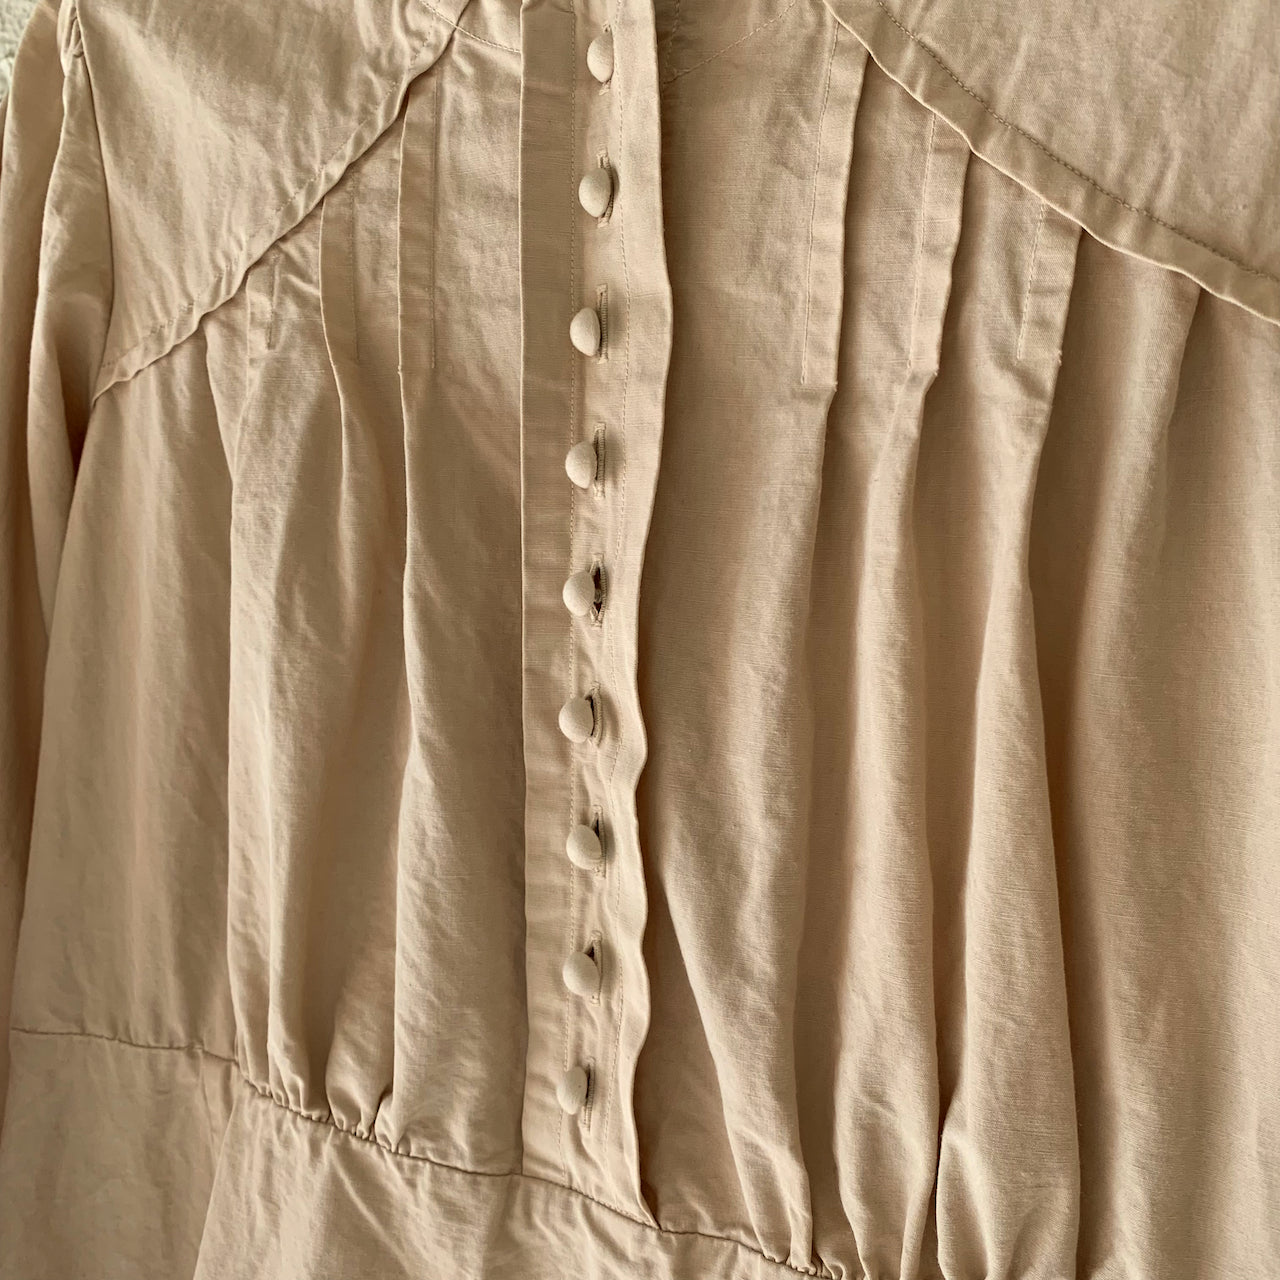 COSMIC WONDER｜17CW17281｜Cotton linen classic broadcloth 1920's work dress｜Beeswax